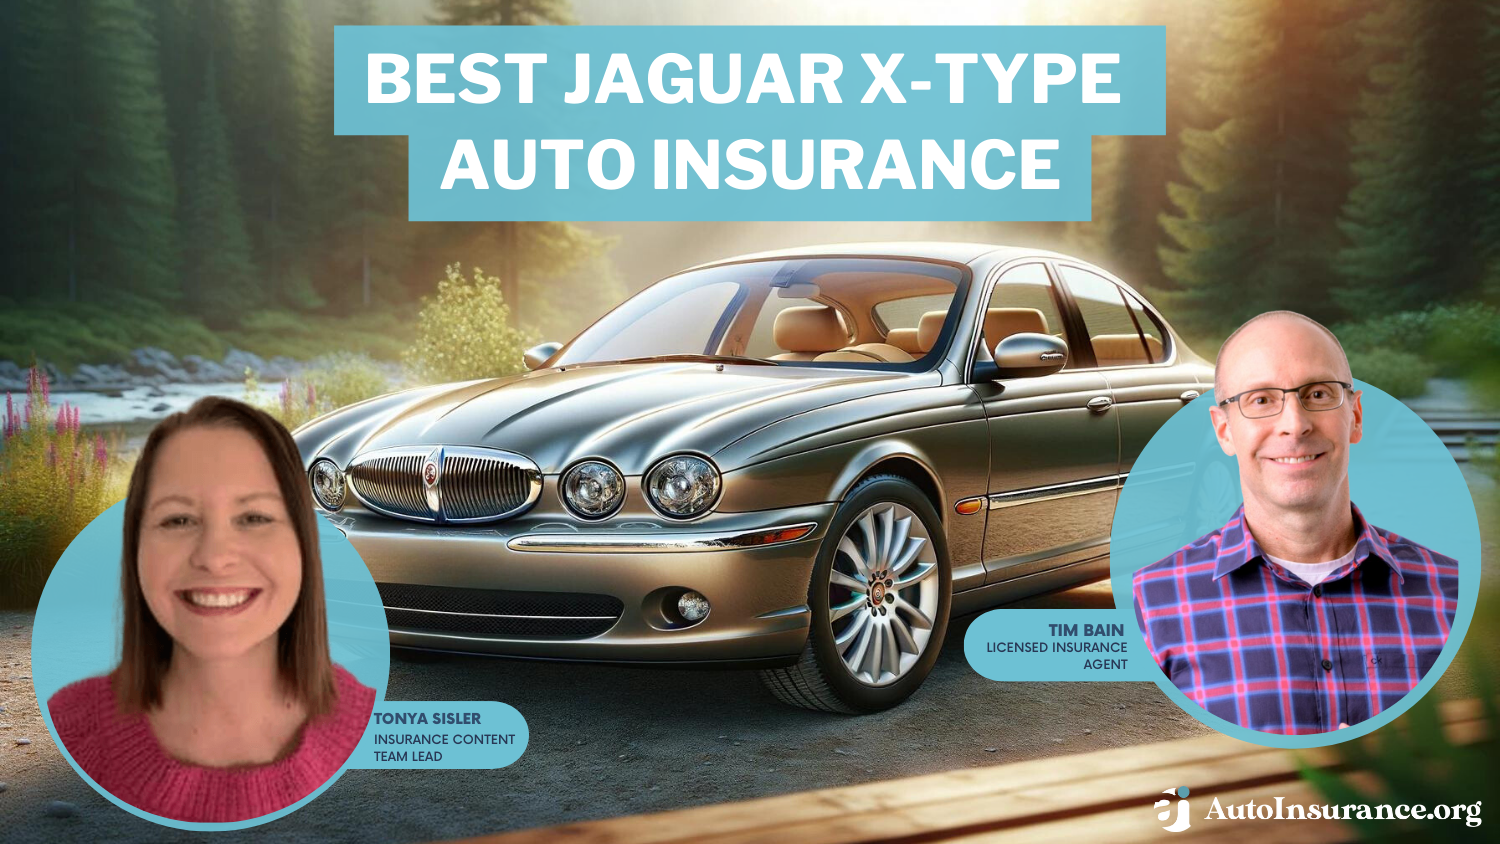 Best Jaguar X-TYPE Auto Insurance: State Farm, USAA, and Progressive